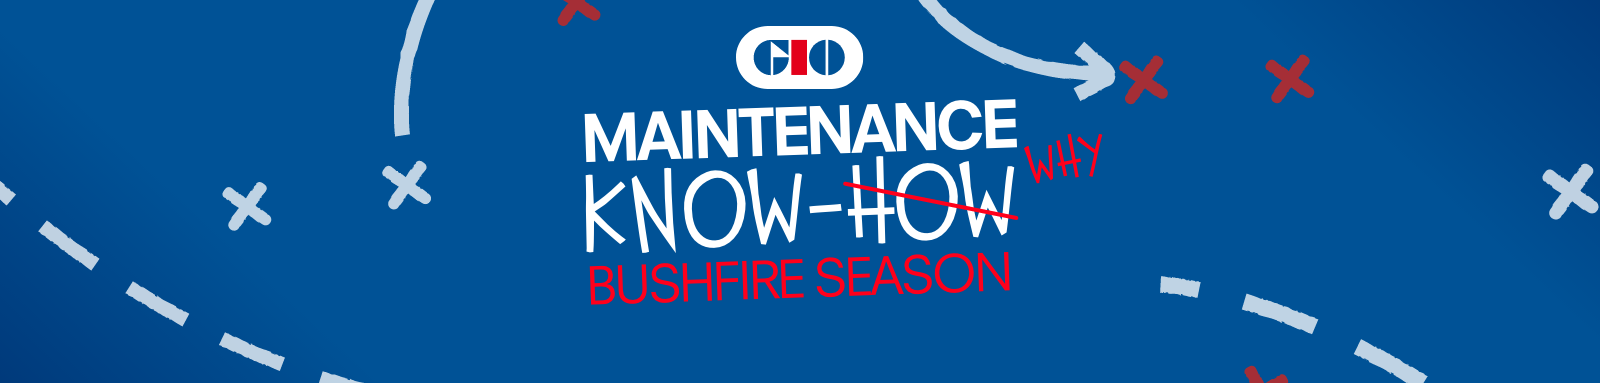 GIO Maintenance Know Why Bushfire Season banner